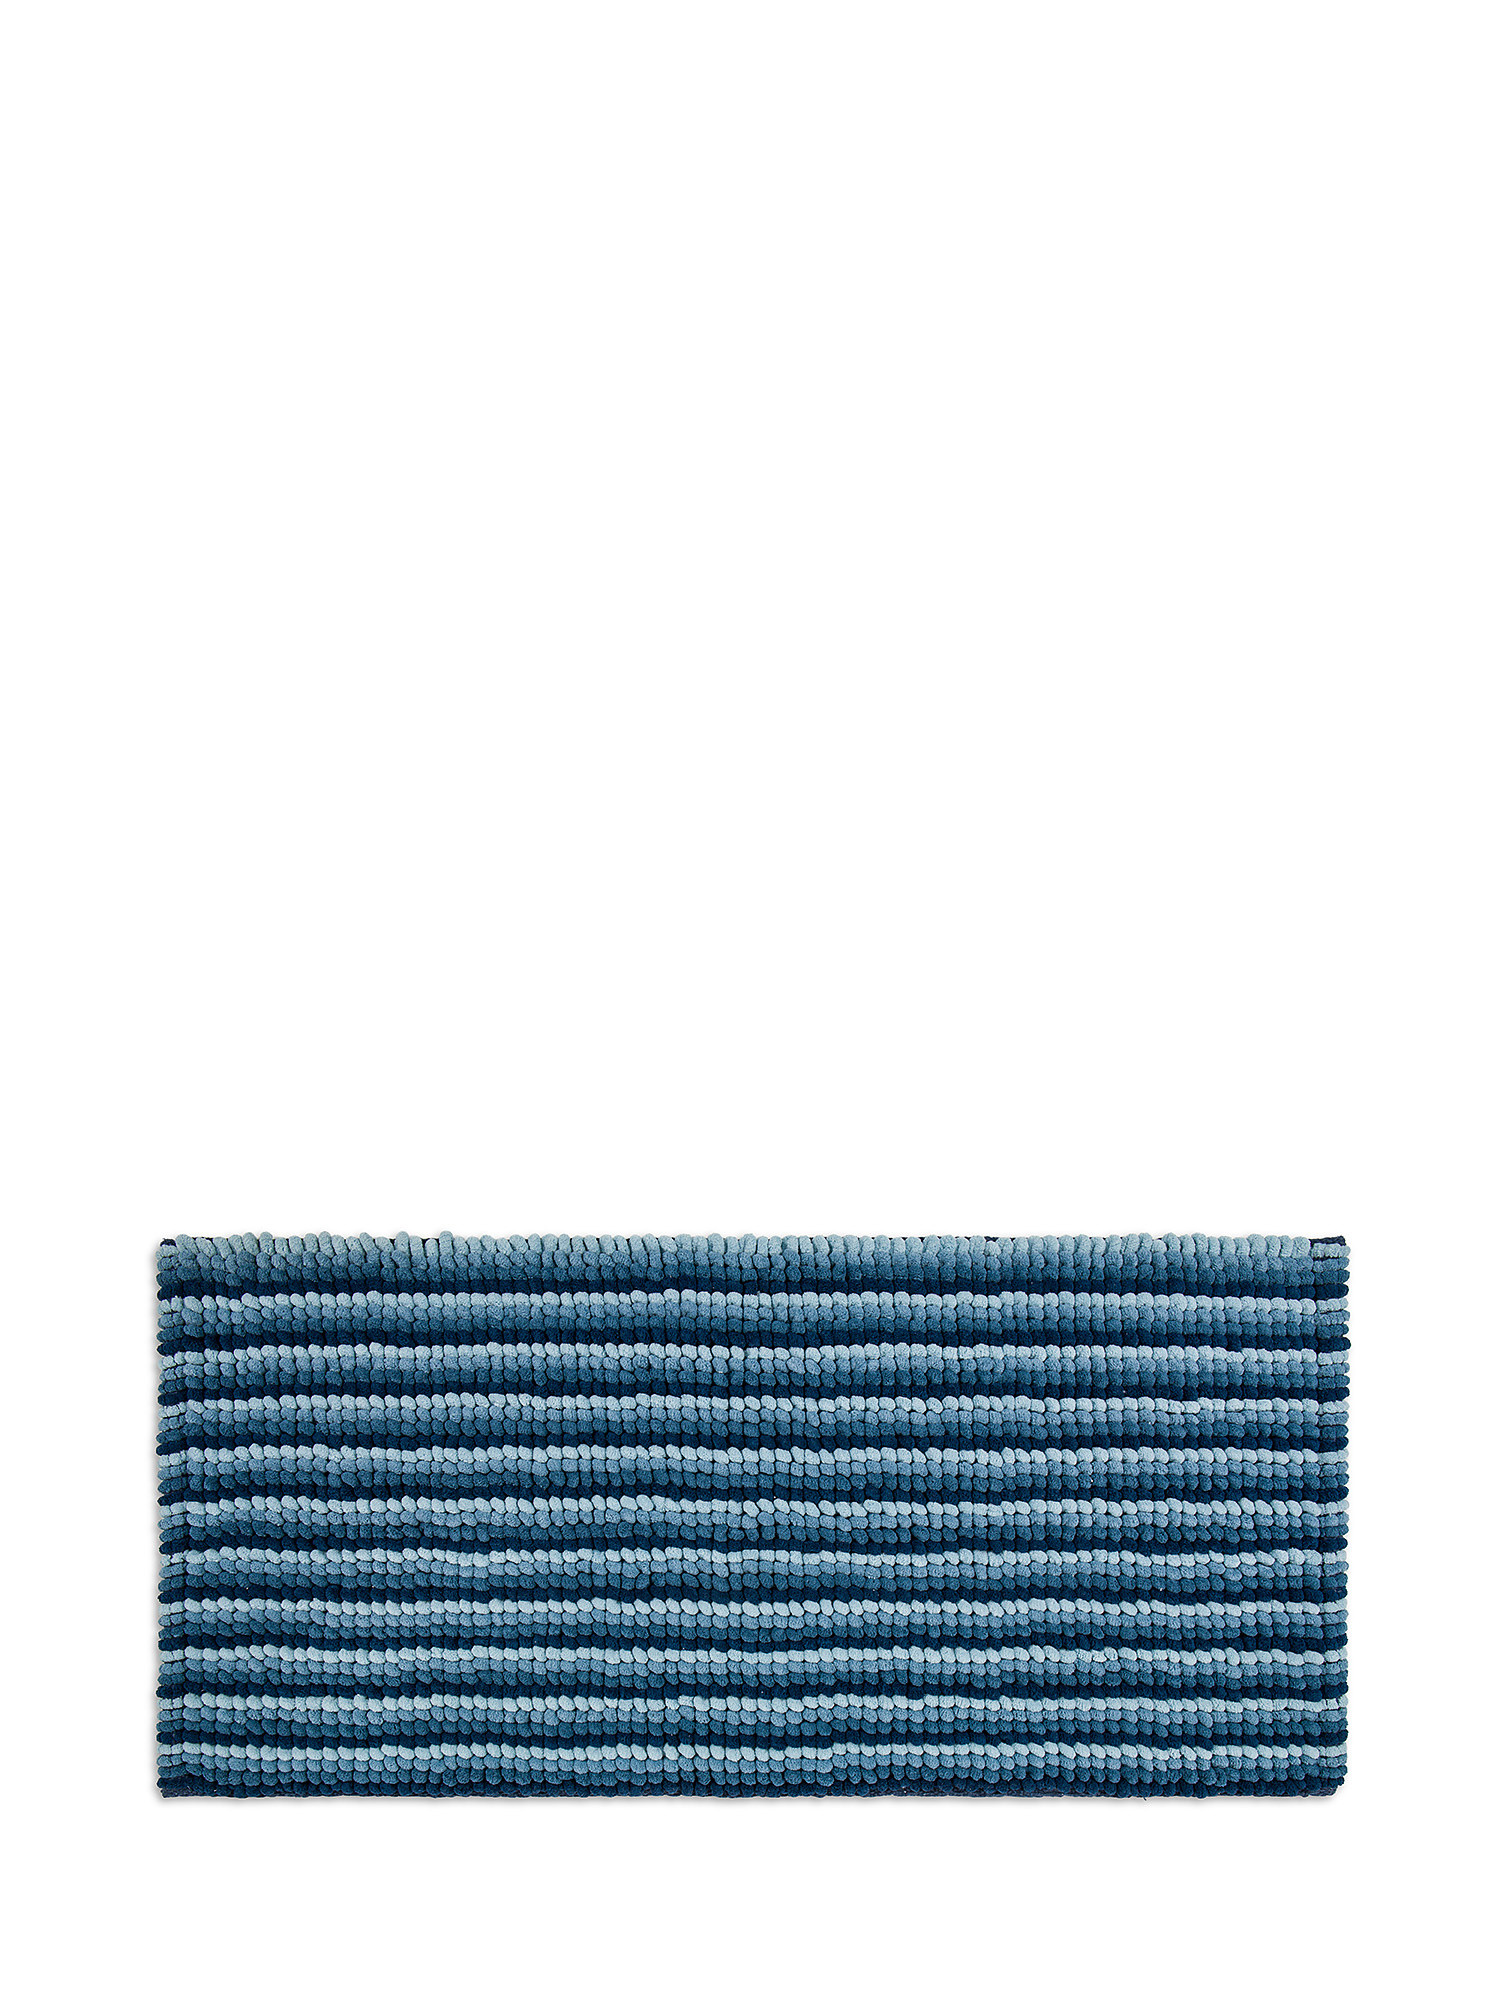 Tappeto bagno in ciniglia, Blu, large image number 0